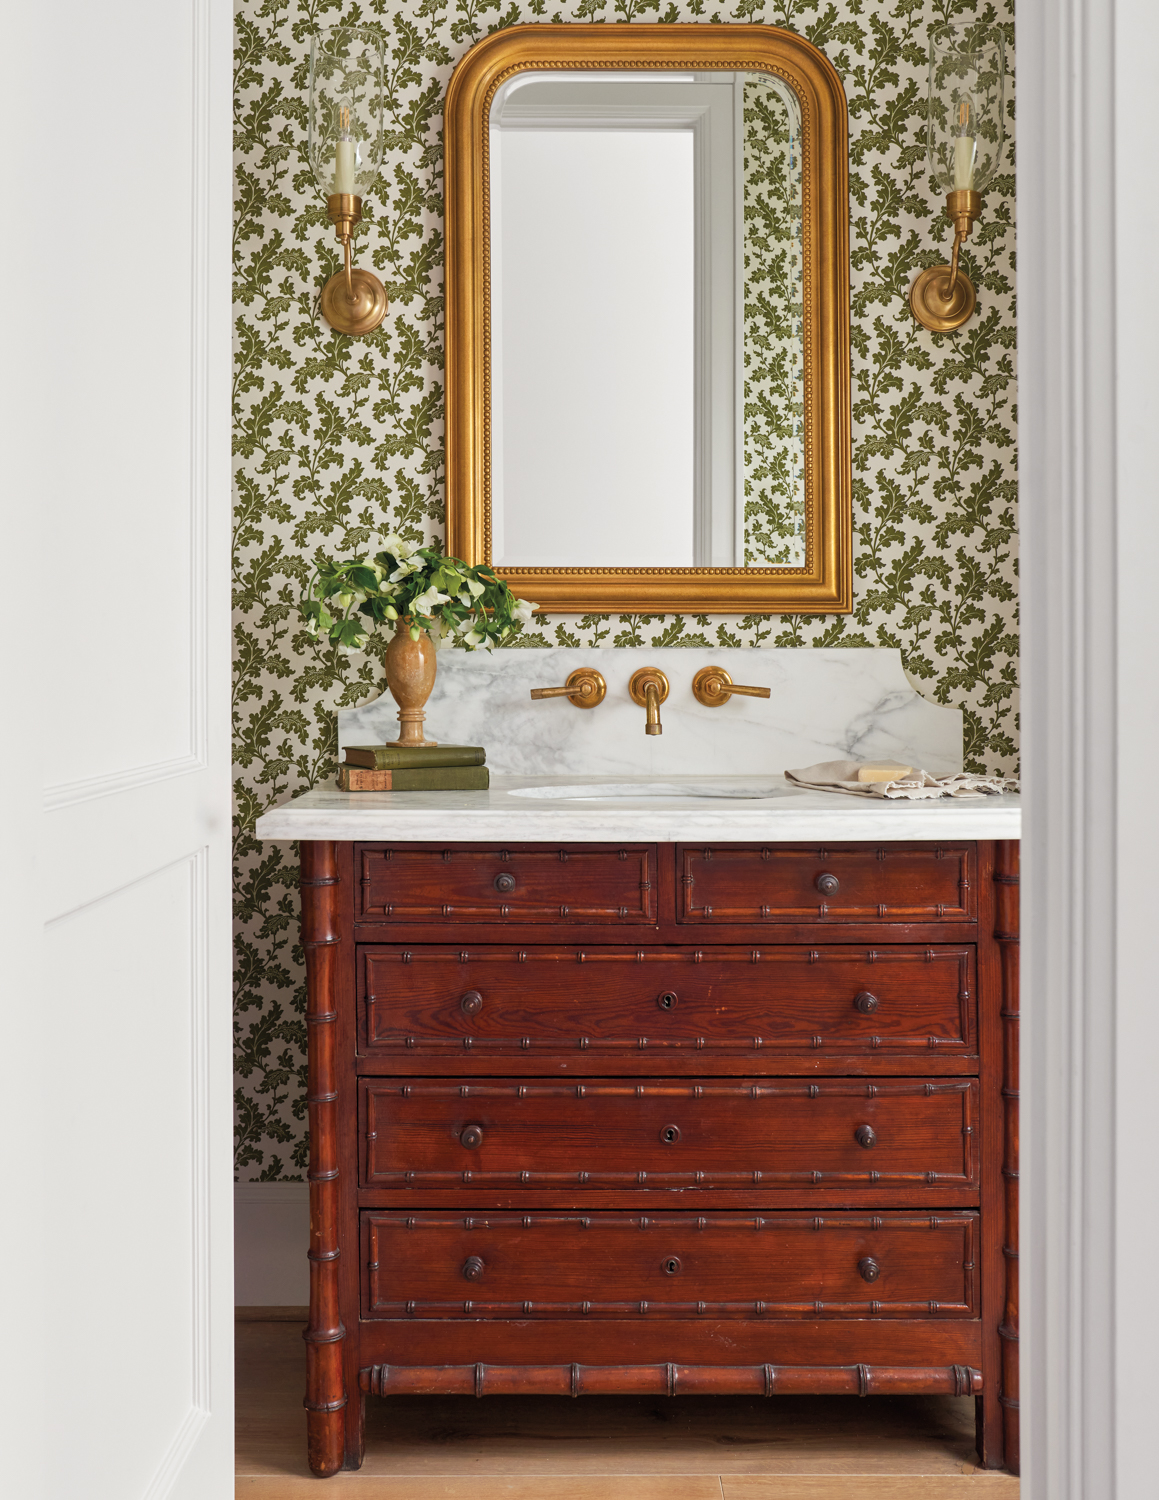 powder bathroom with antique vanity...